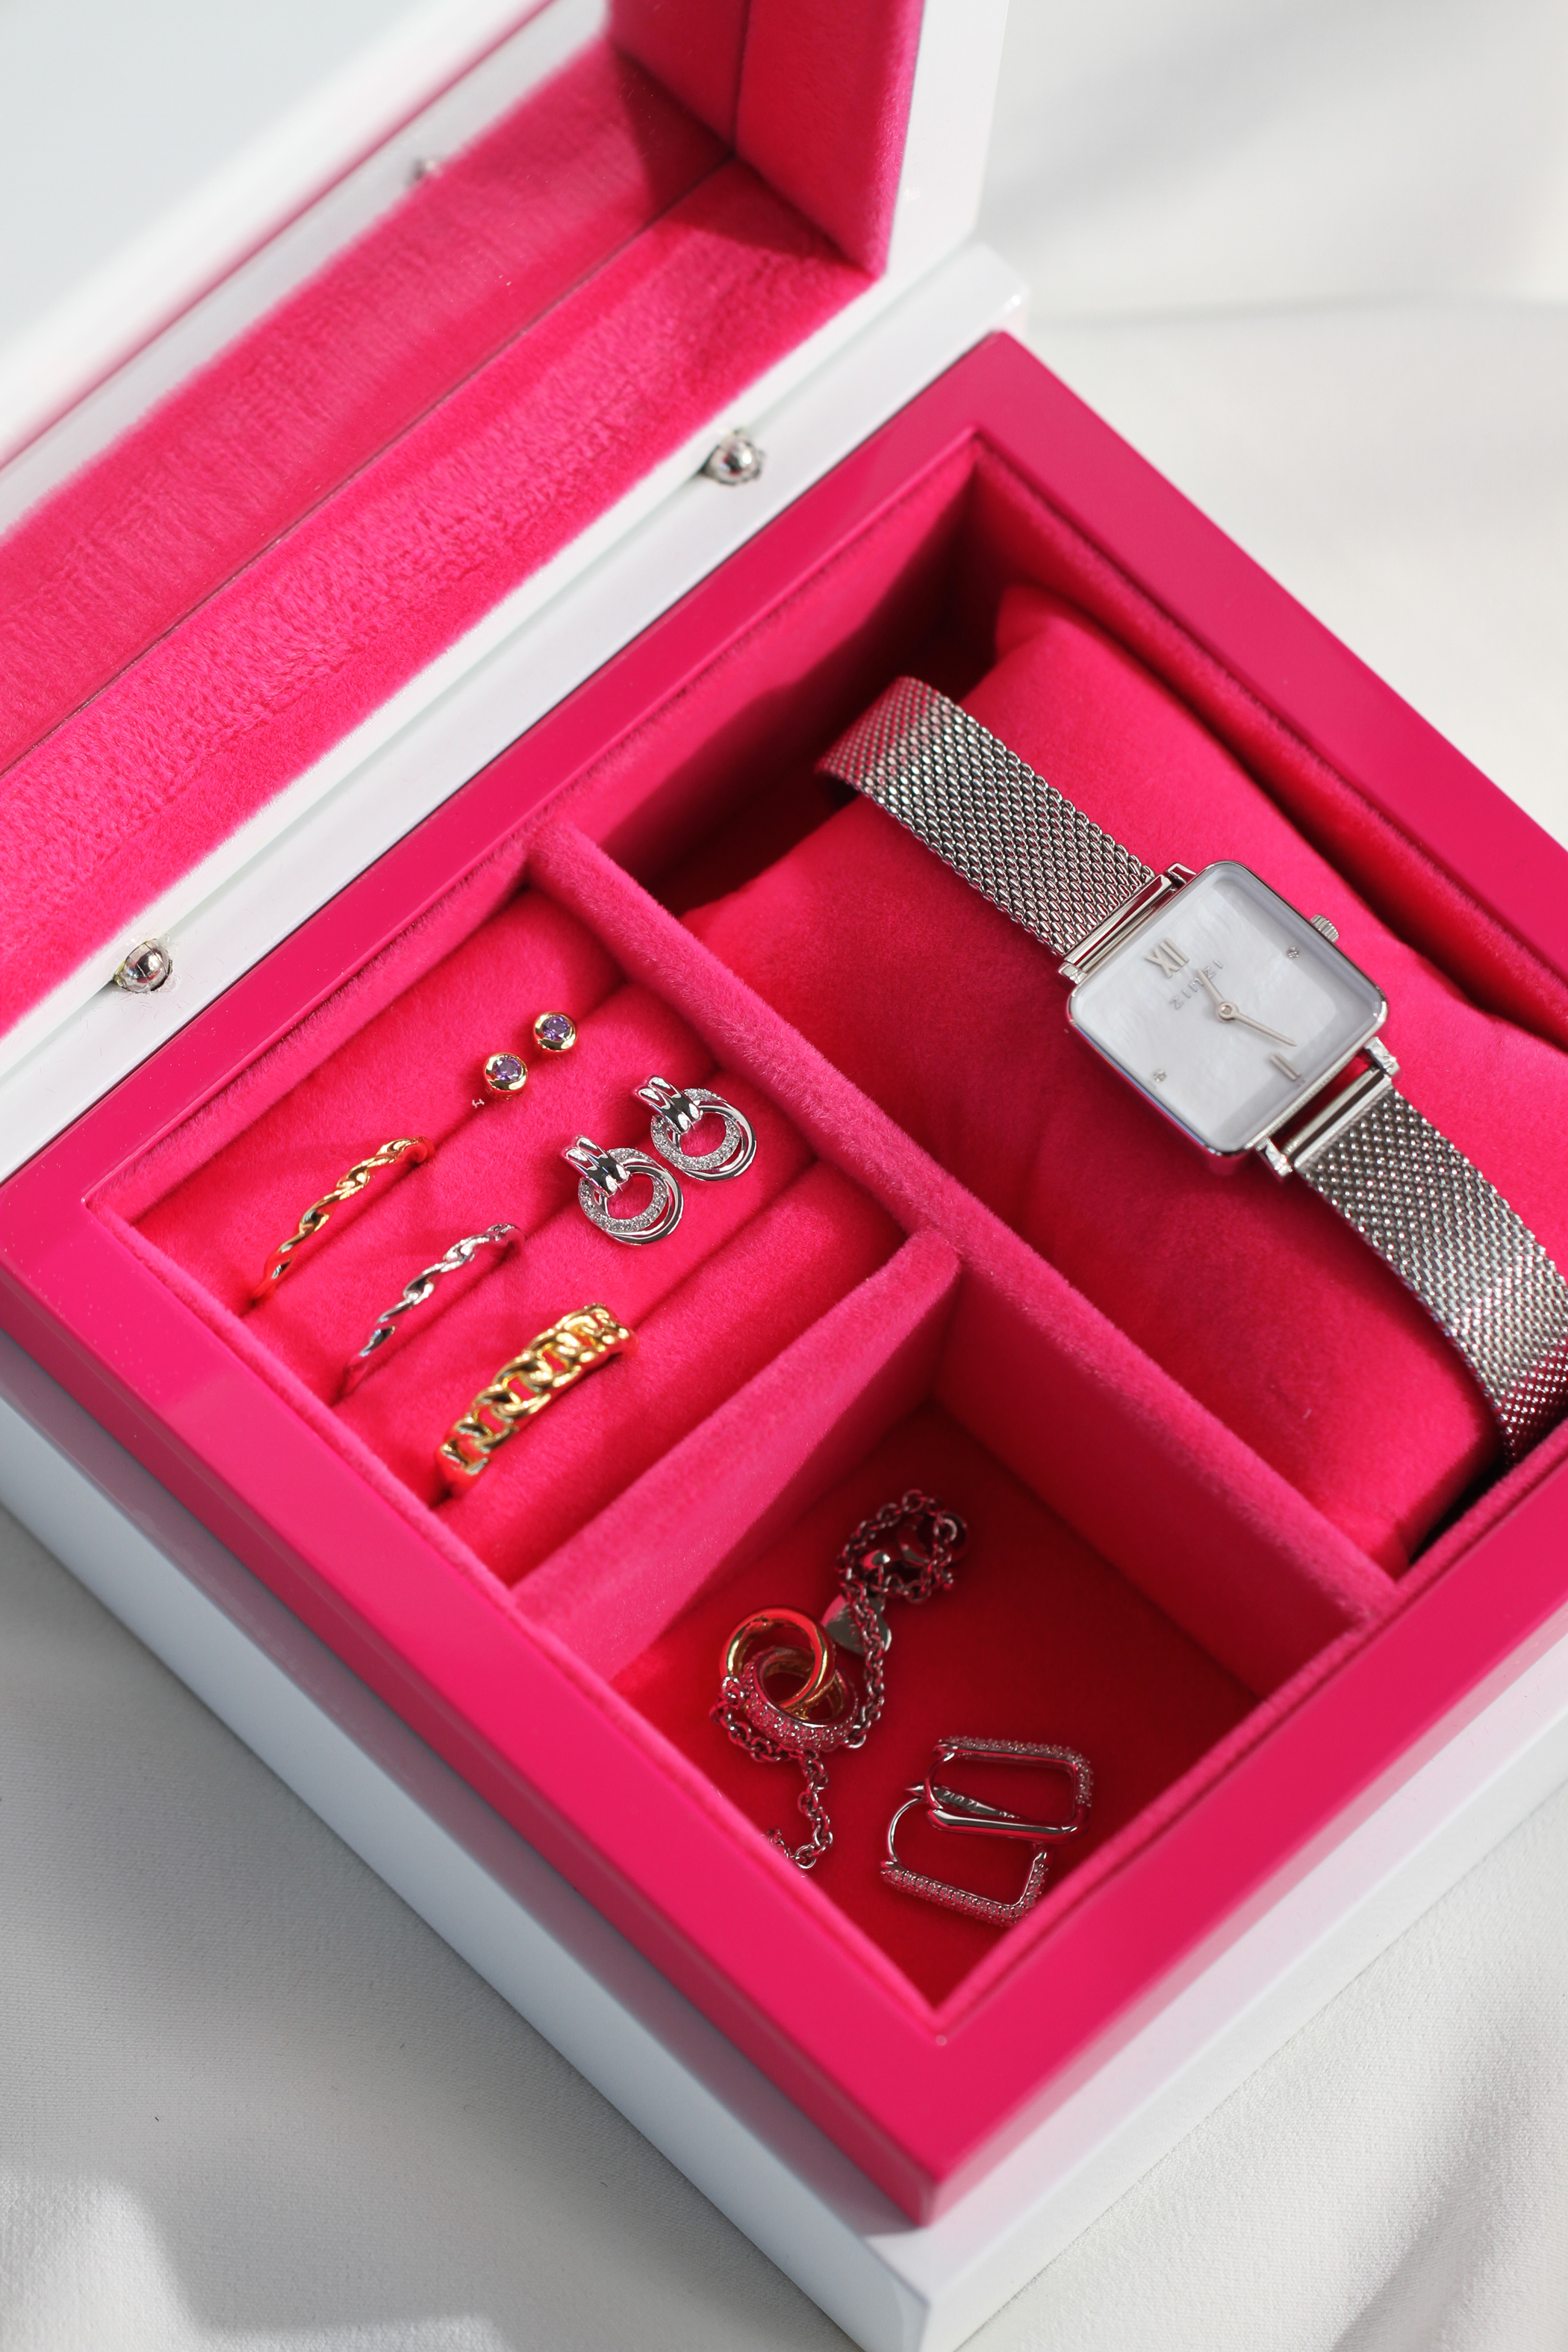 ZINZI Jewellery Box Pink JEWELBOX